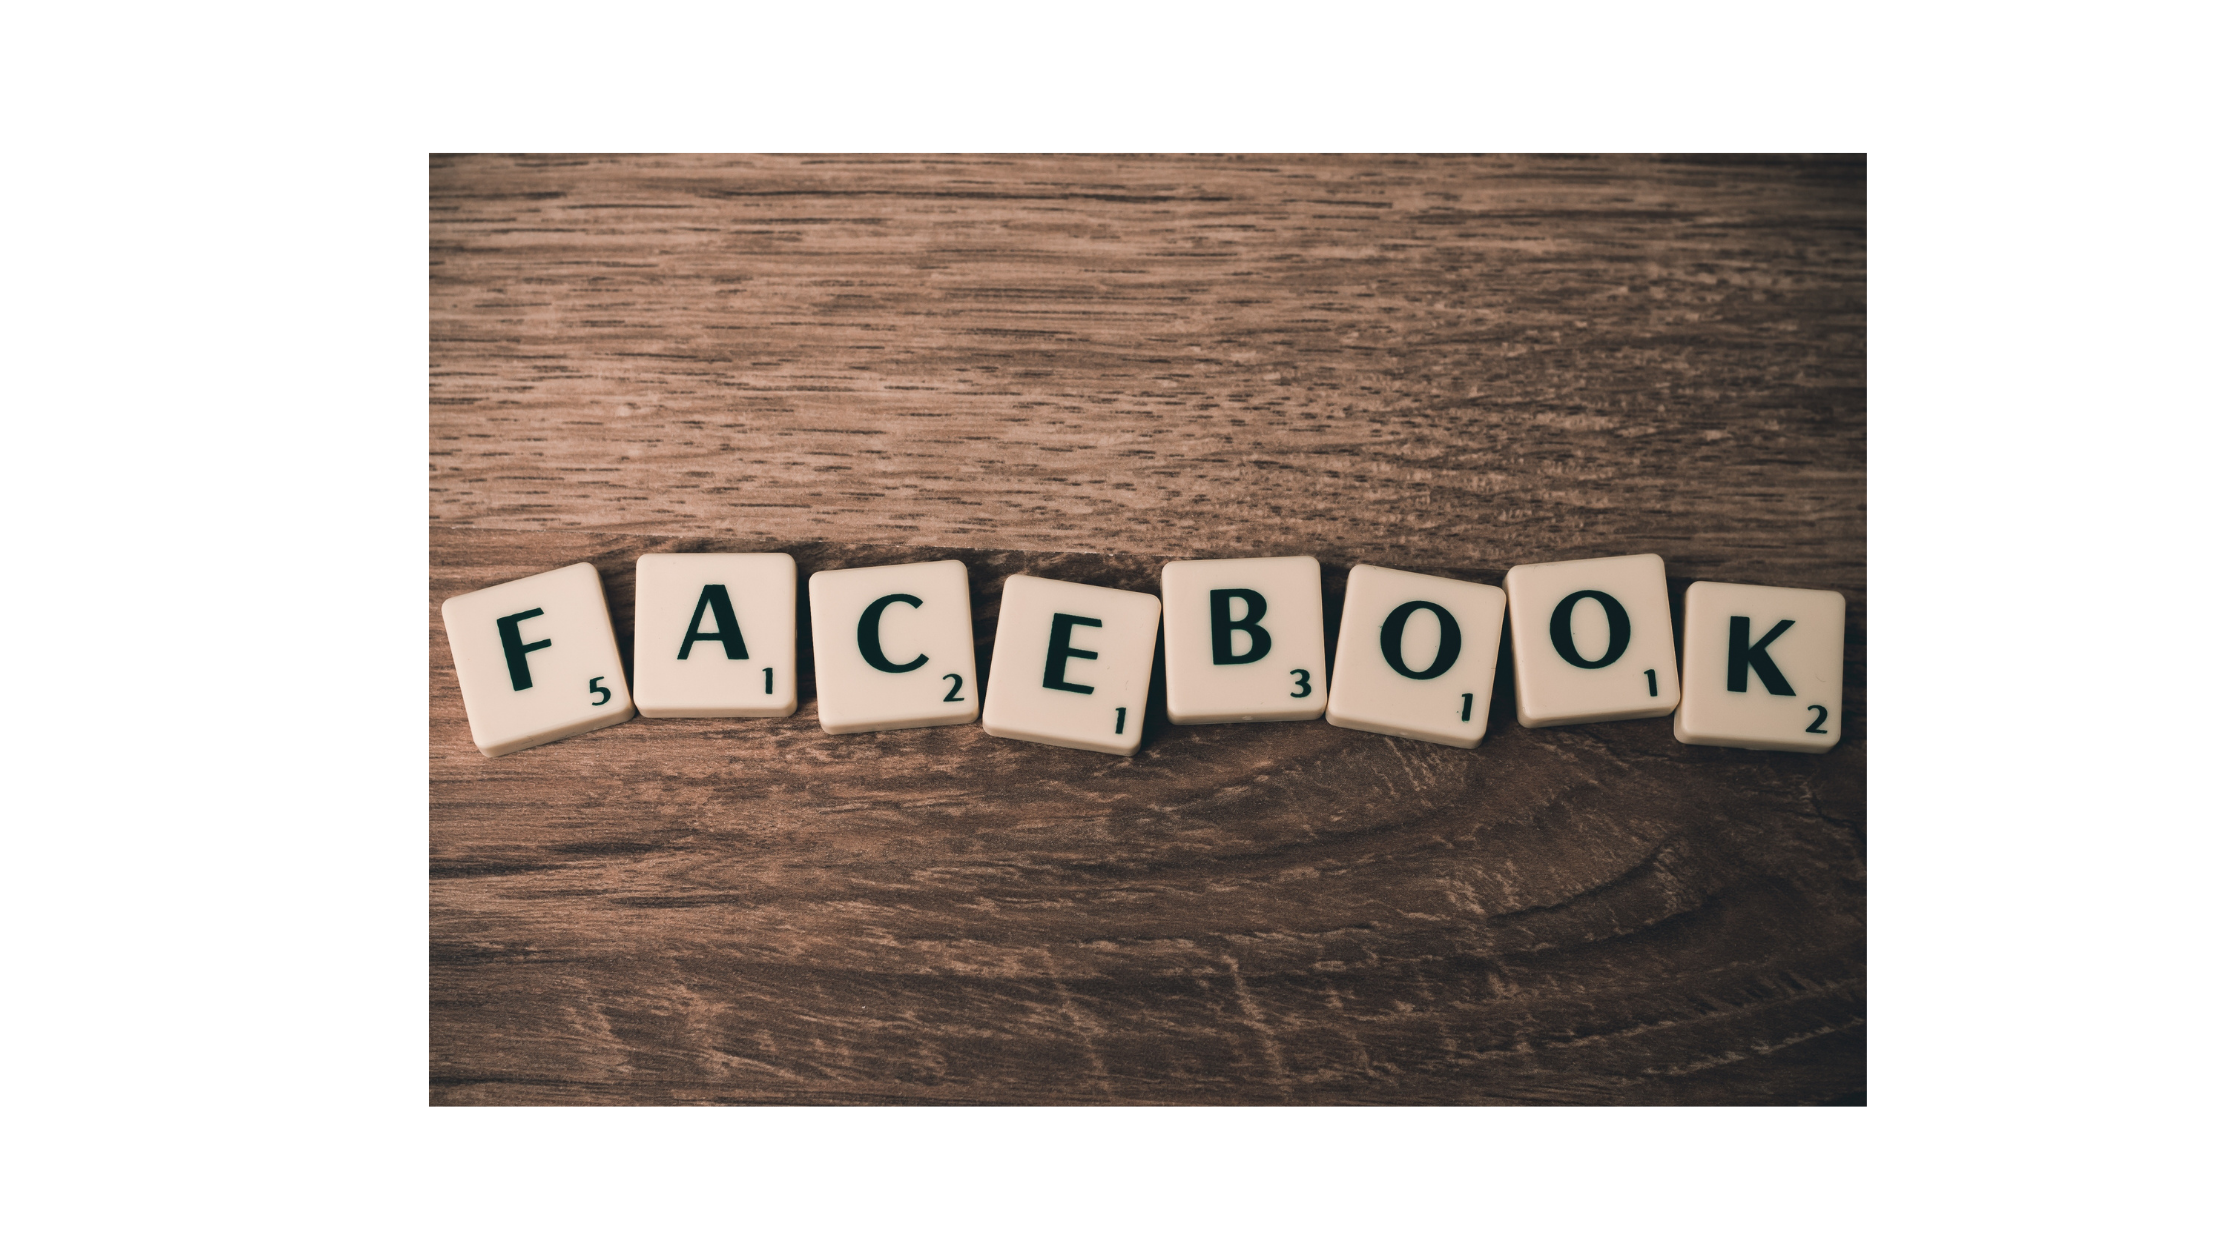 How to unfriend in Facebook?